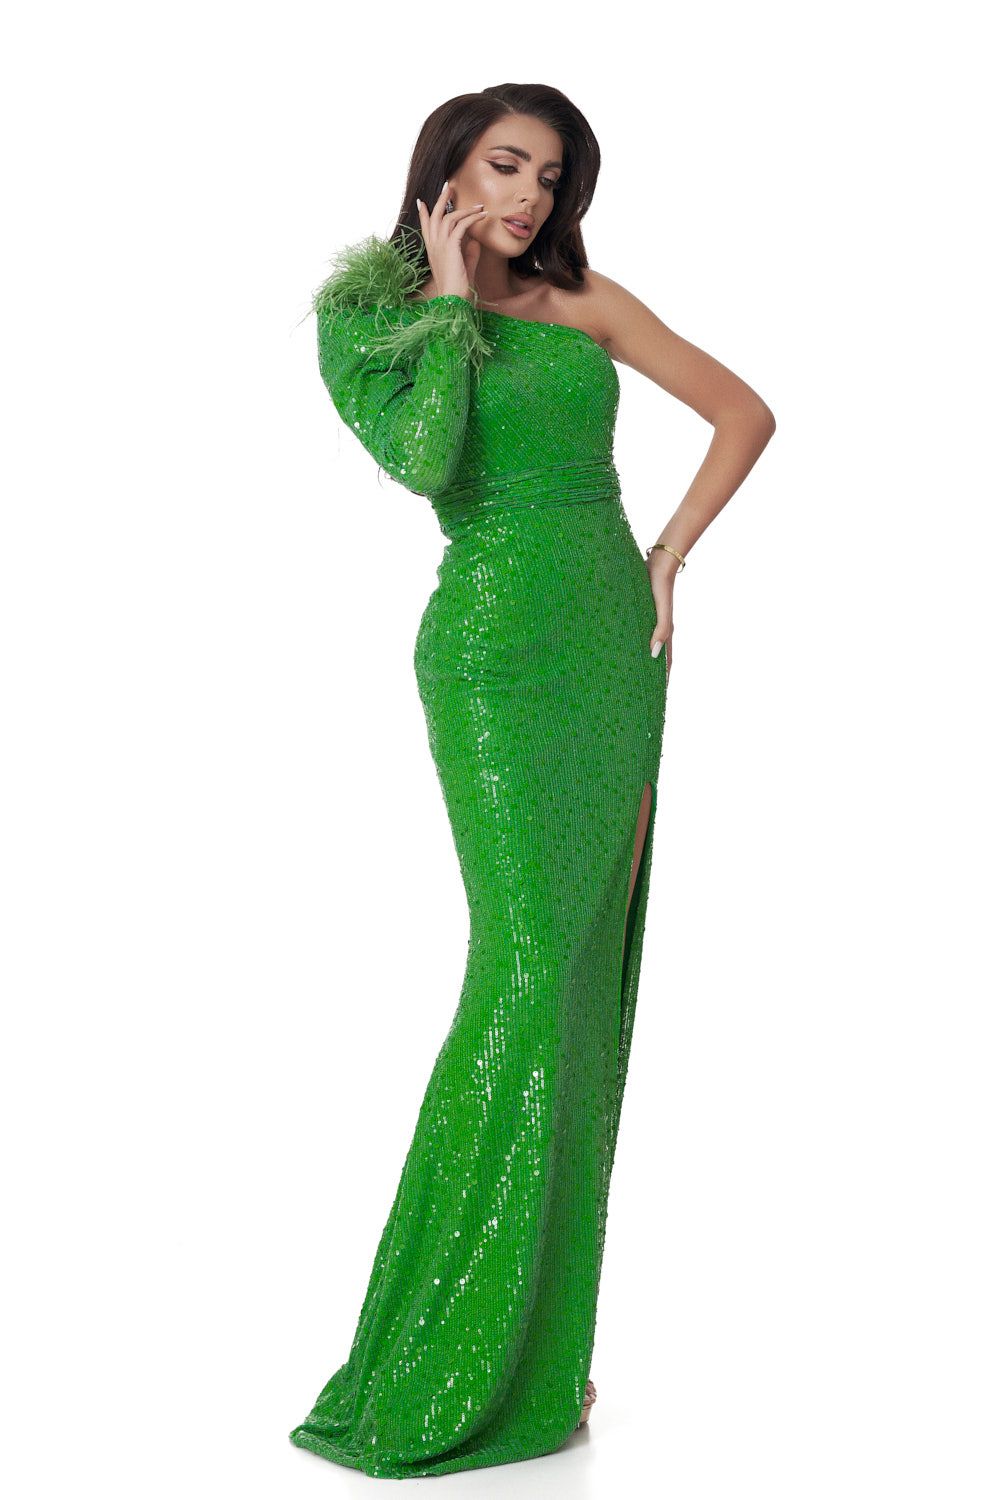 Long green sequin dress for women Adosinda Bogas